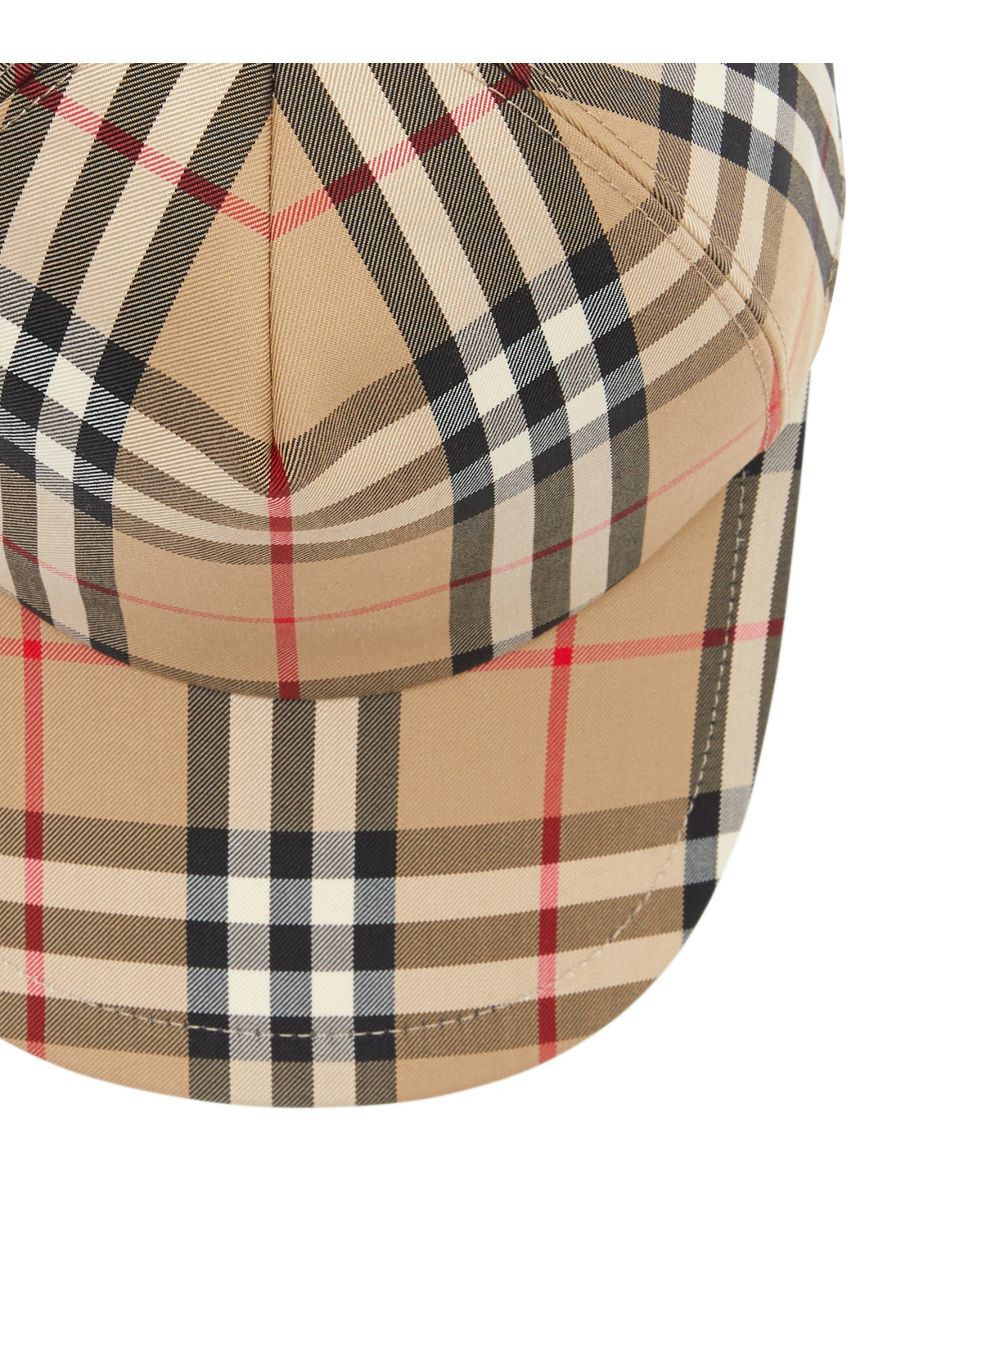 Burberry Logo Appliqué Vintage Check Cap Hats & Scarves | Heathrow ...